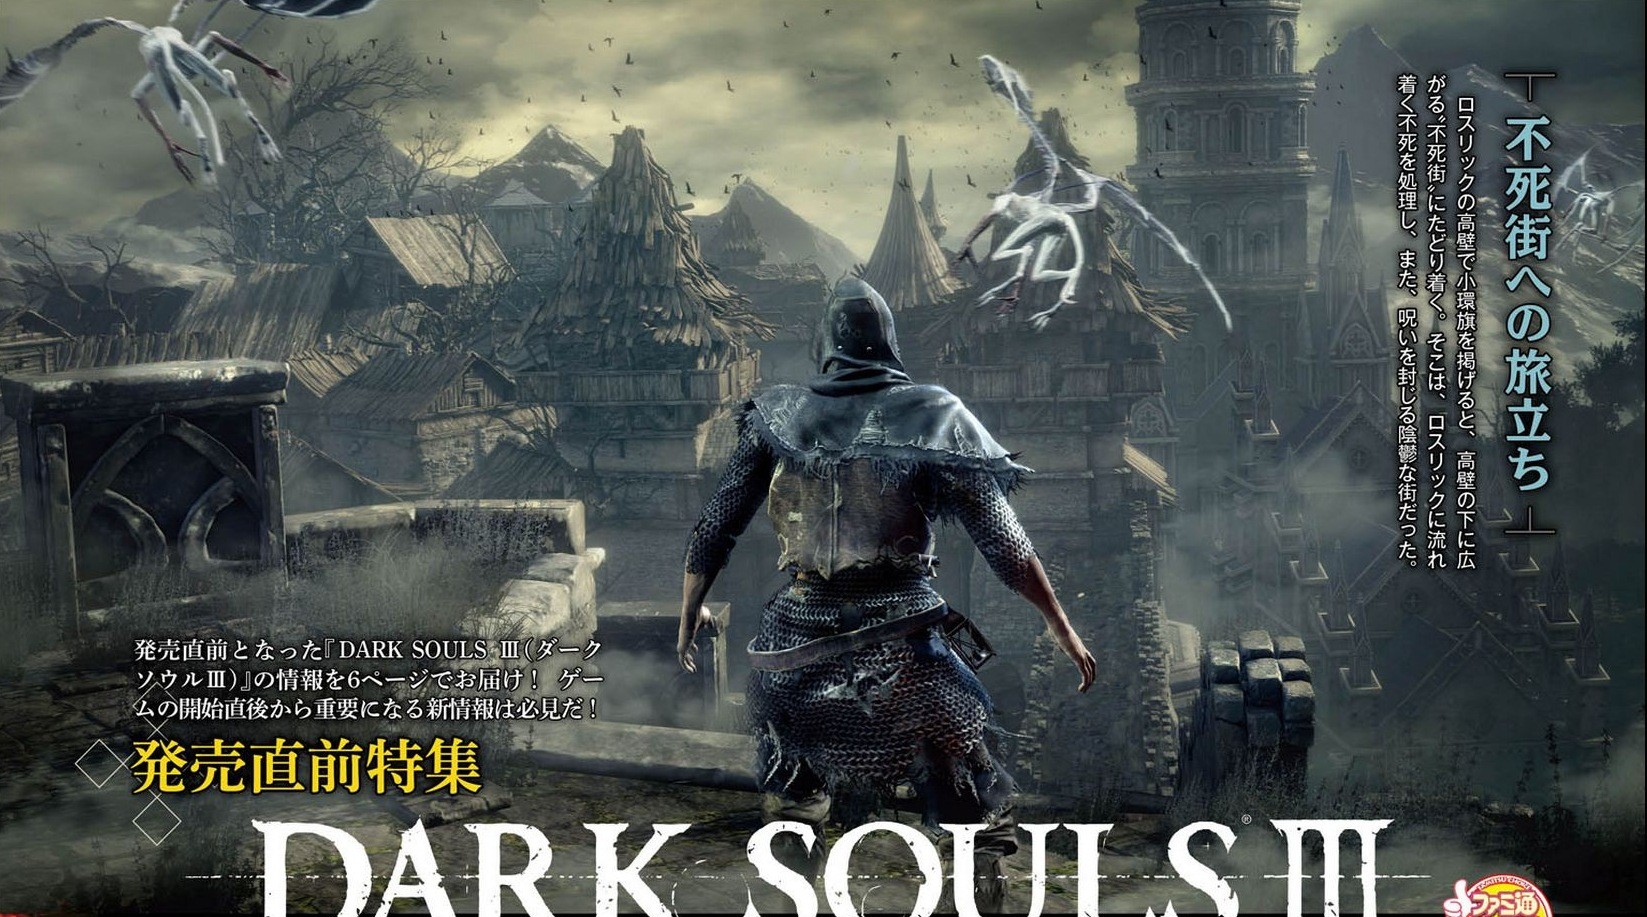 Dark Souls III - свежие скриншоты из нового номера Famitsu 64060a6a8947138ed04cd10bd5306e0b